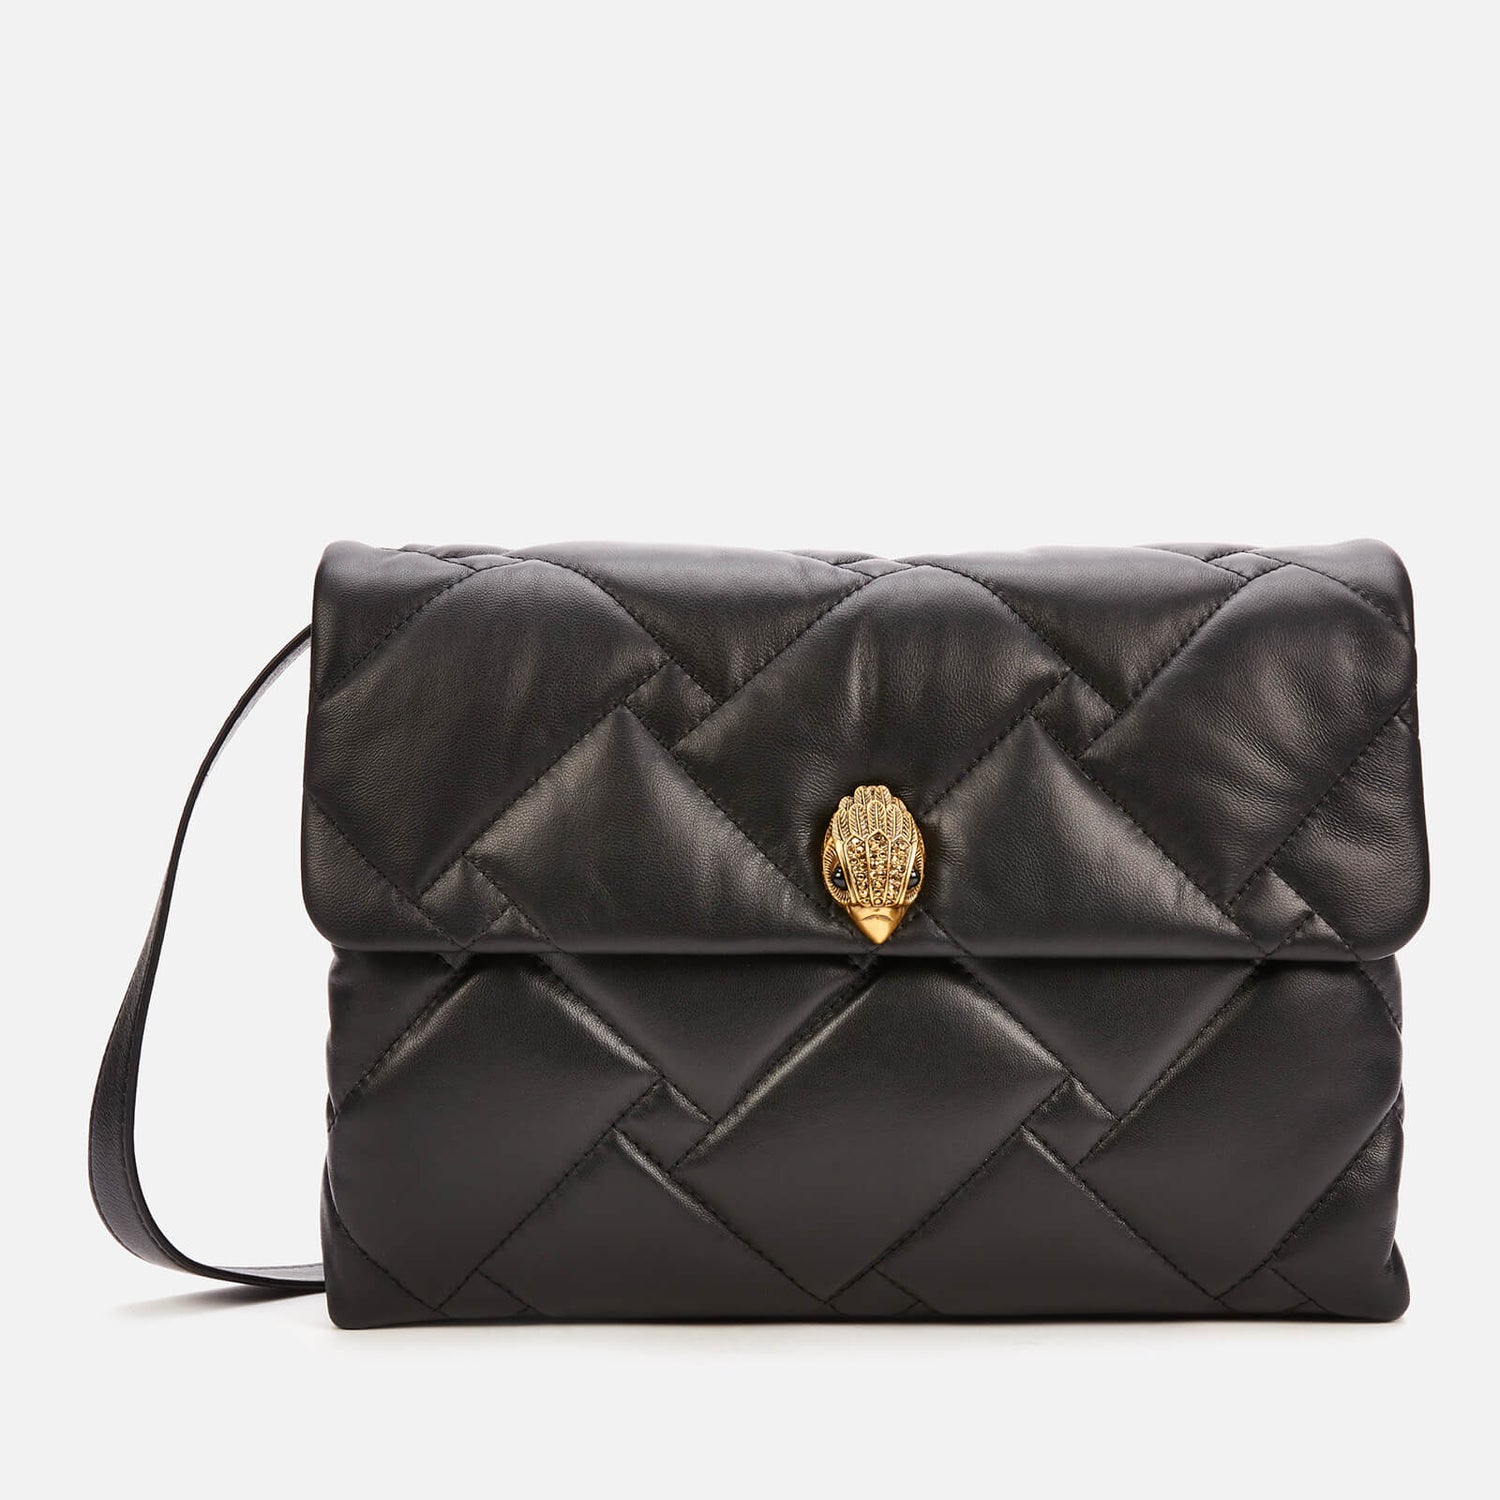 Kurt Geiger London Women's Kensington Soft Large Bag - Black